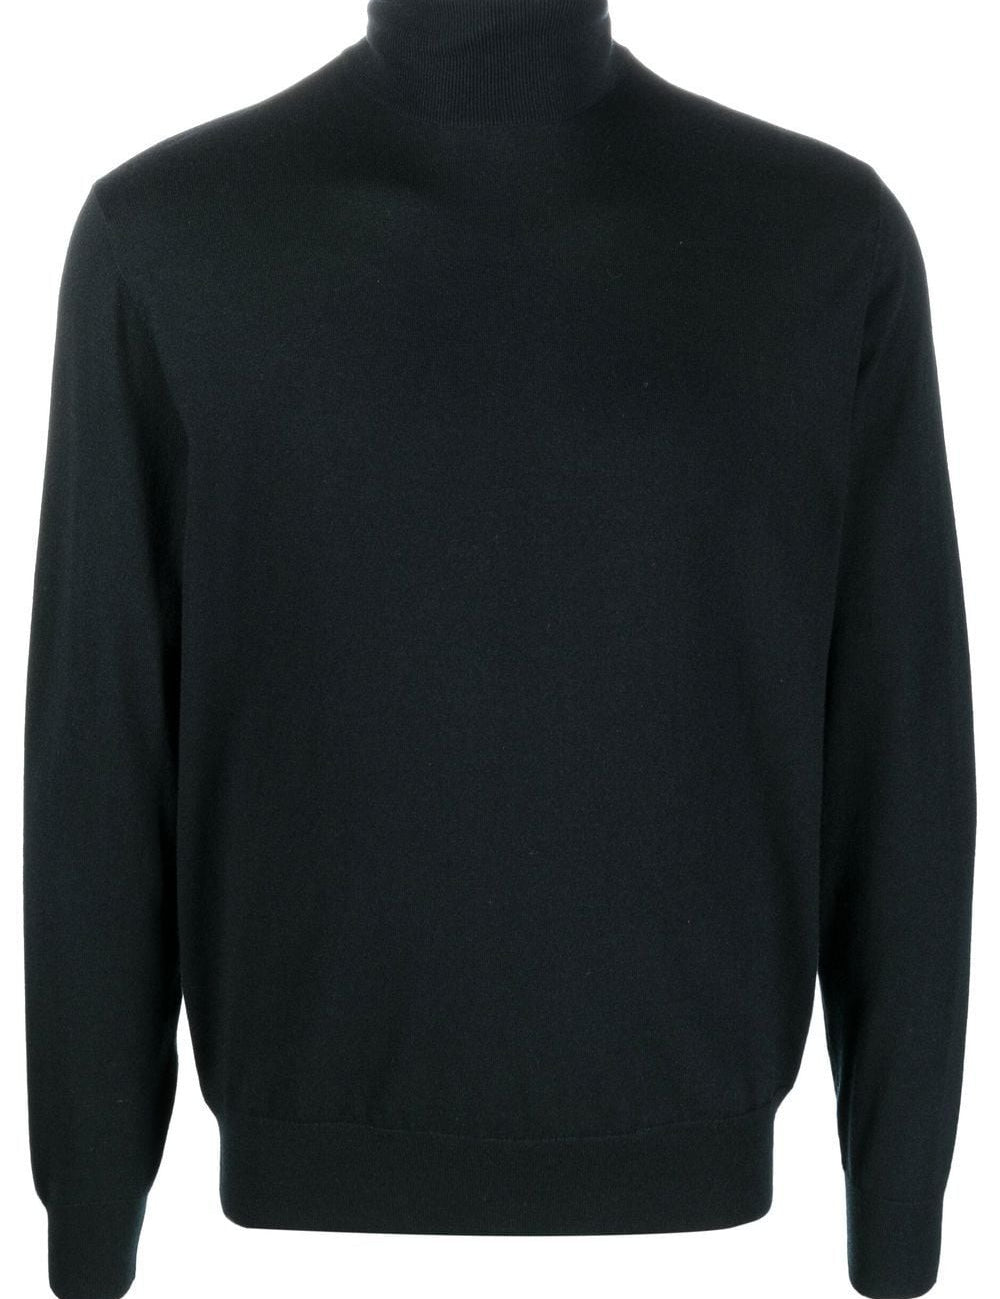 long-sleeve-sweater_92a59532-a73c-48c7-ada9-39e55cc55066.jpg